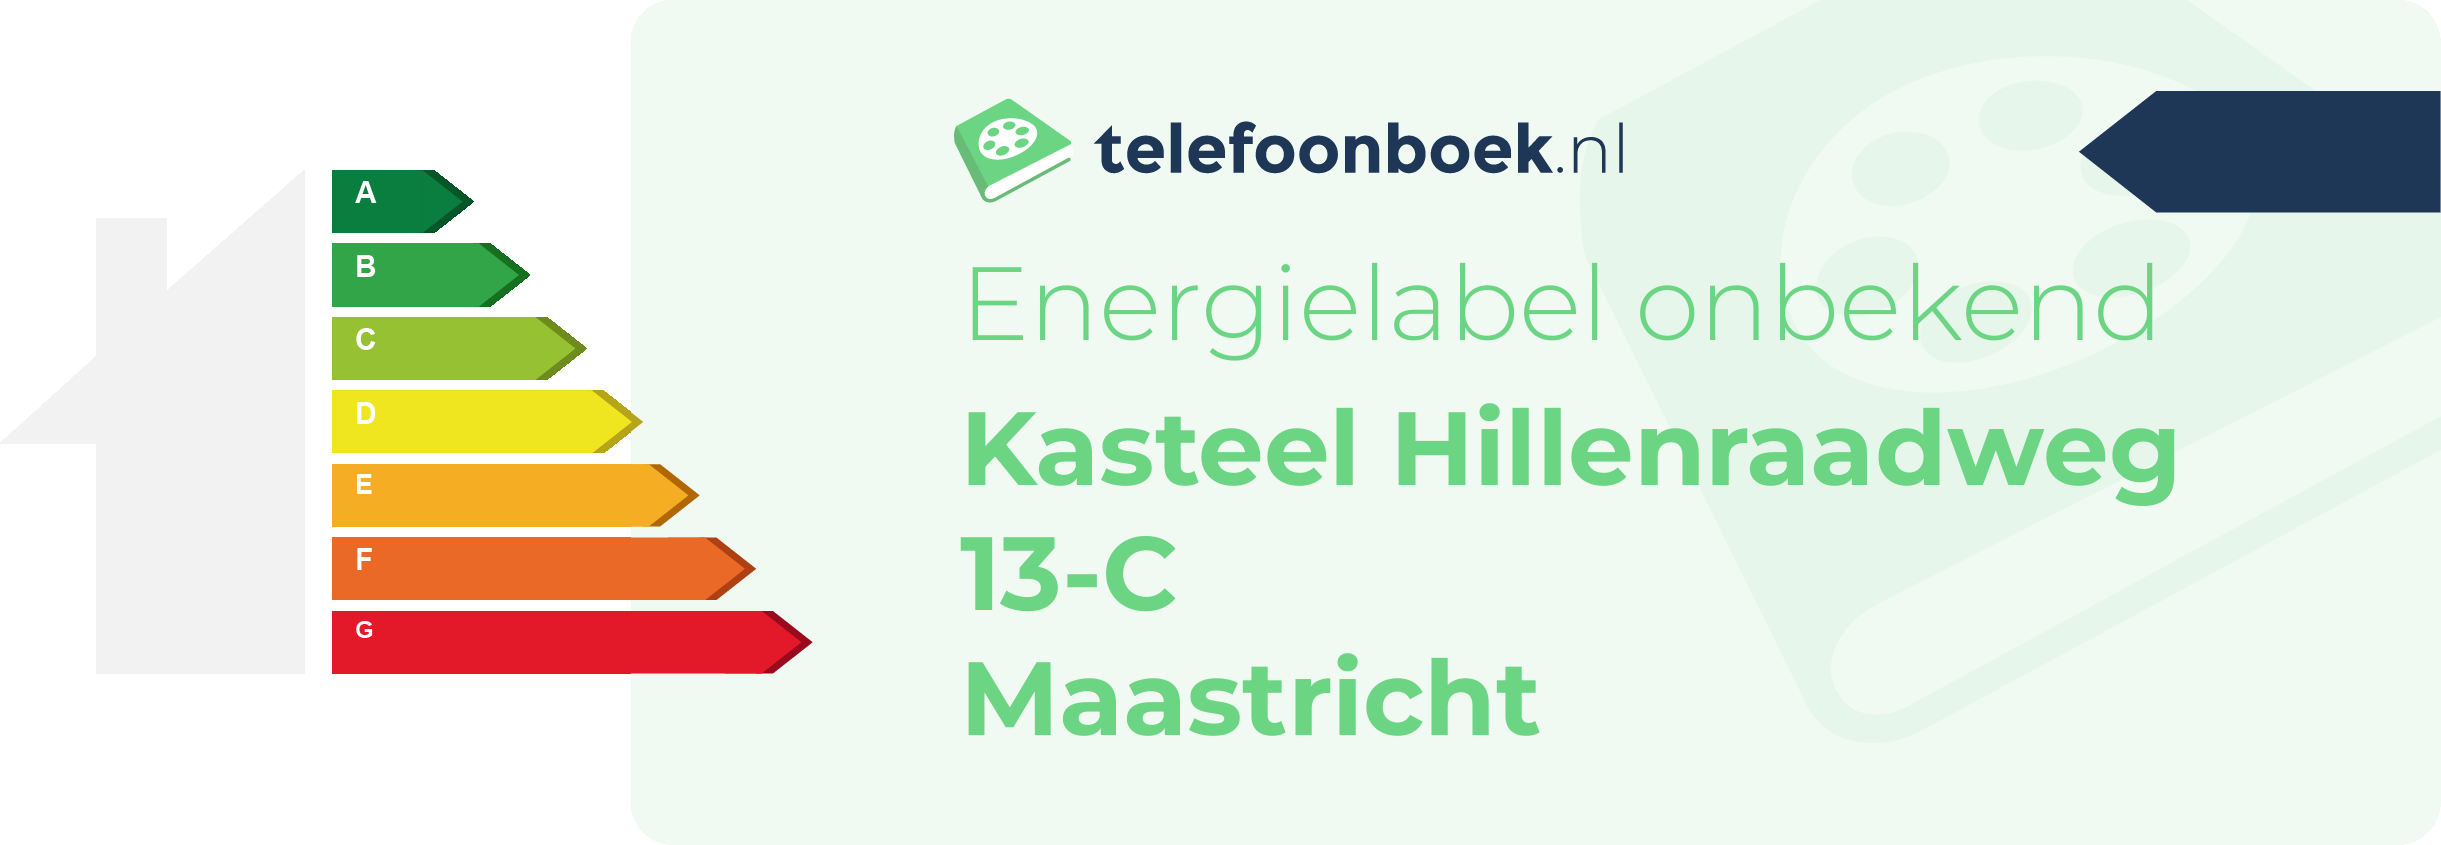 Energielabel Kasteel Hillenraadweg 13-C Maastricht